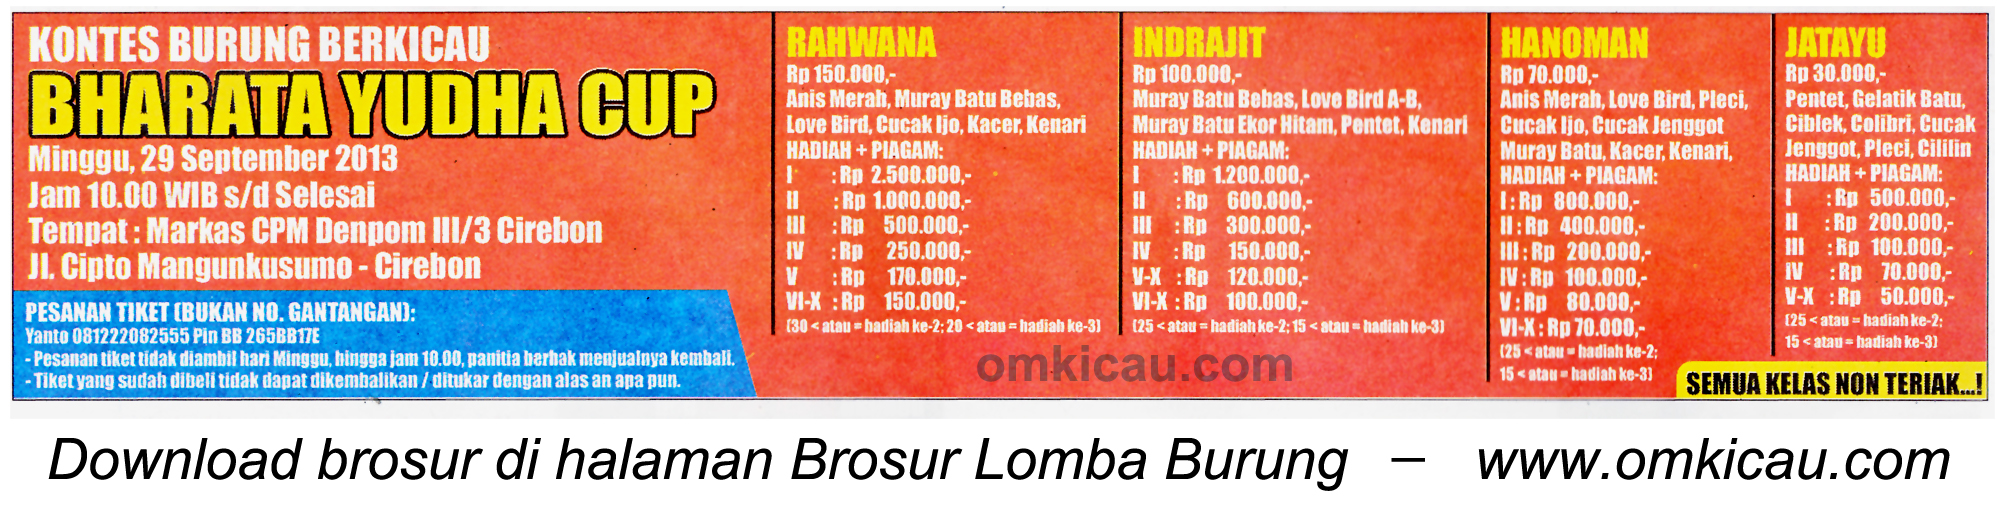 Brosur Kontes Burung Berkicau Bharata Yudha Cup, Cirebon, 29 September 2013